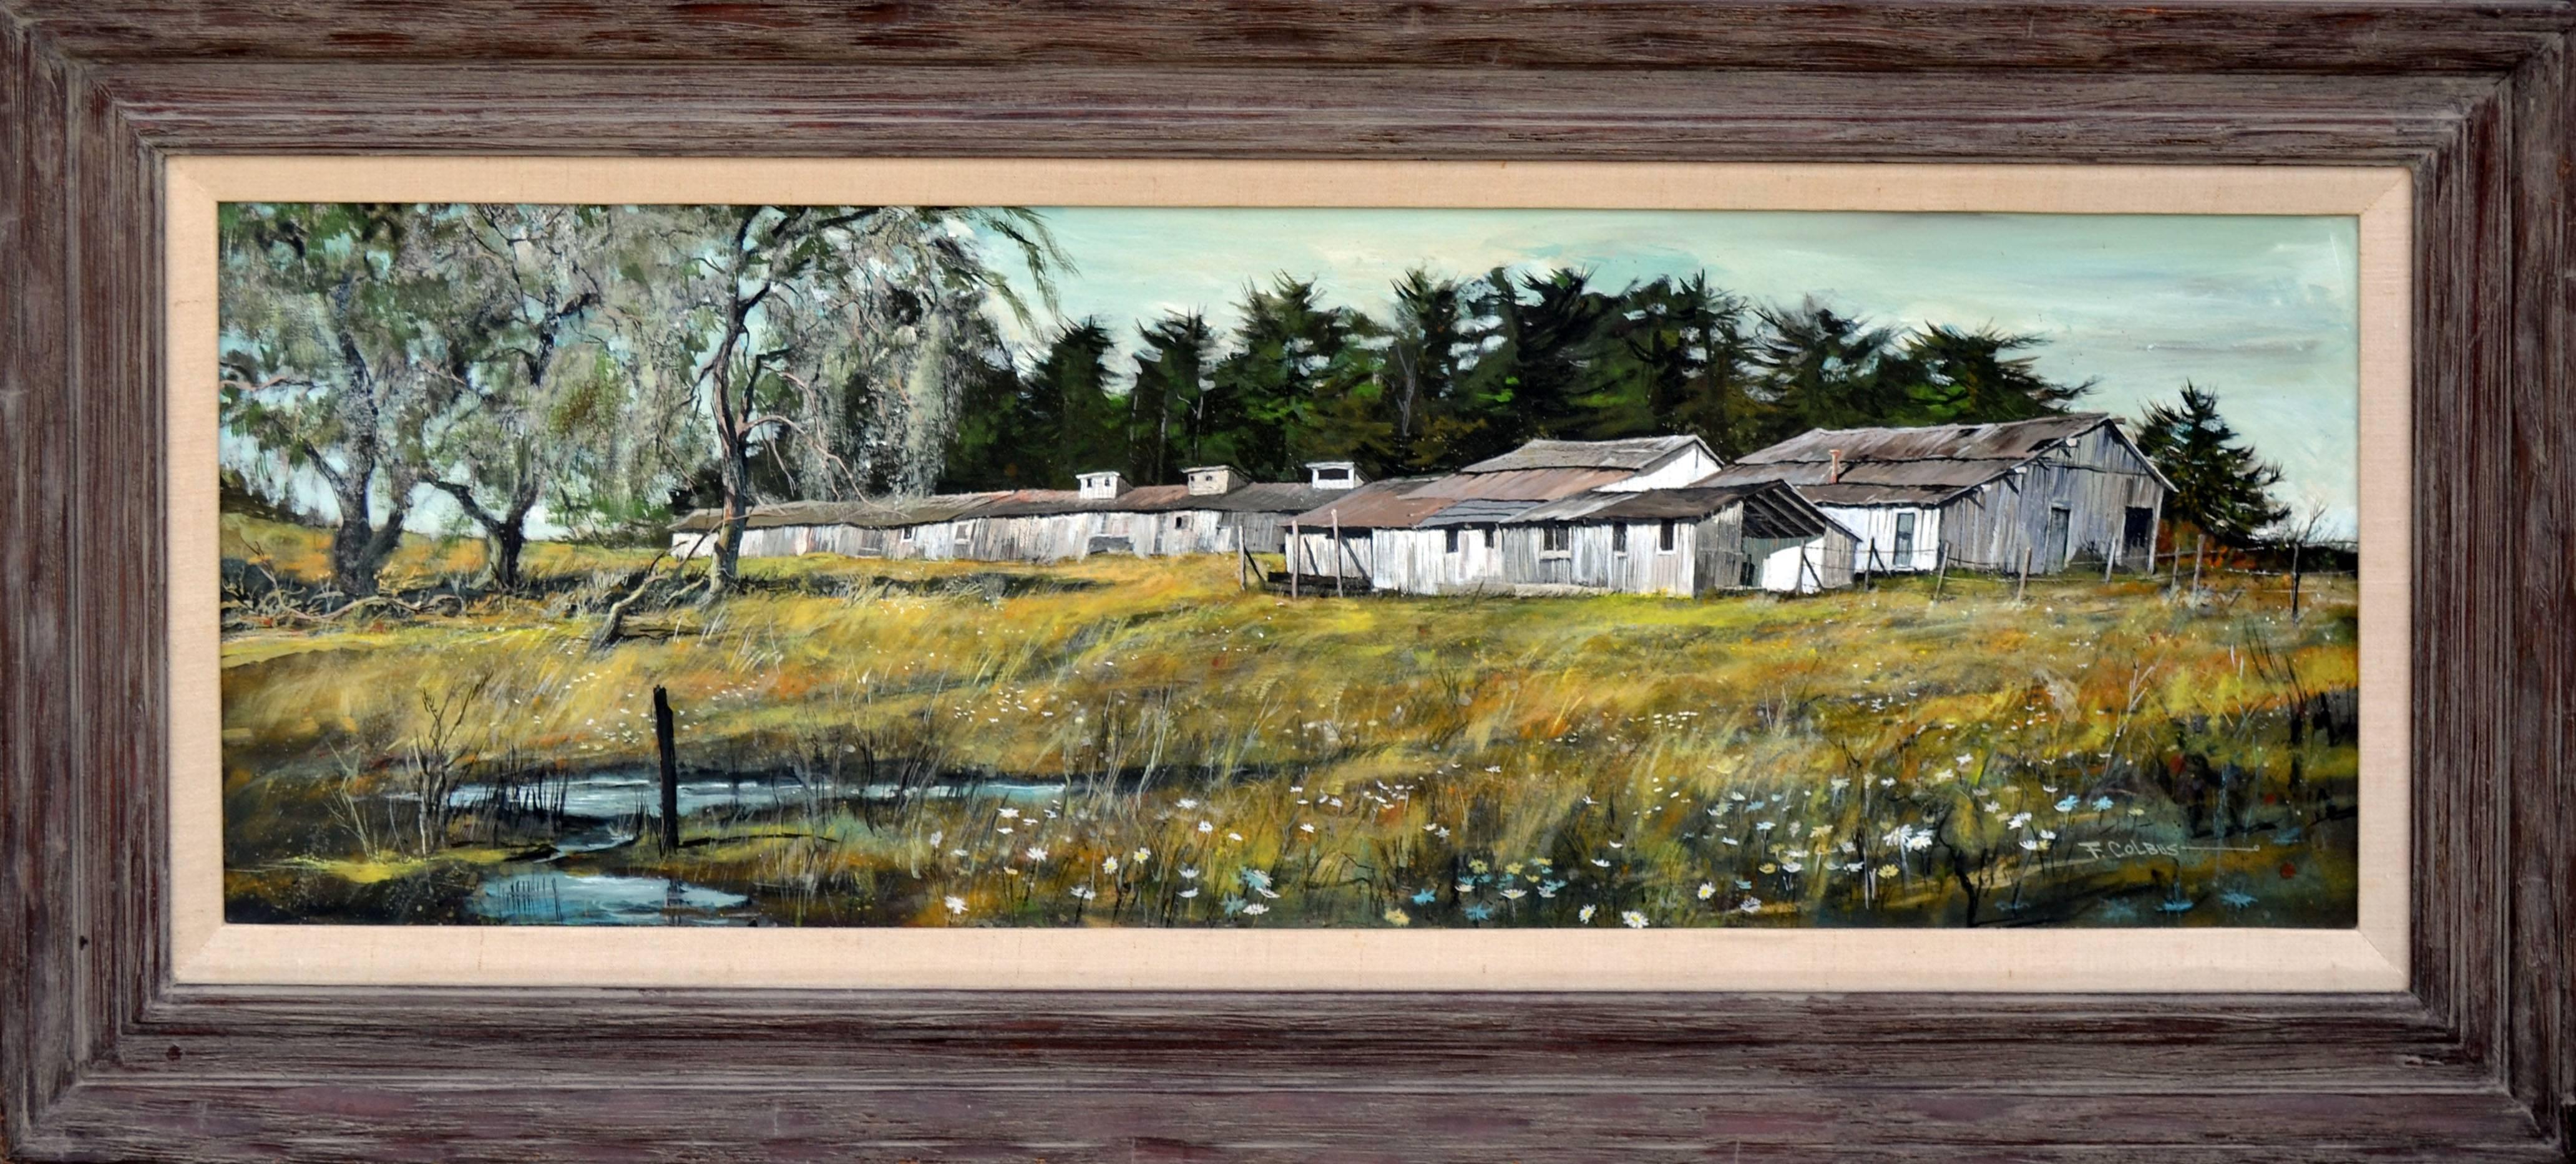 Frederick Colbus Landscape Painting - Landscape of Egg Barns in Bonny Doon, California